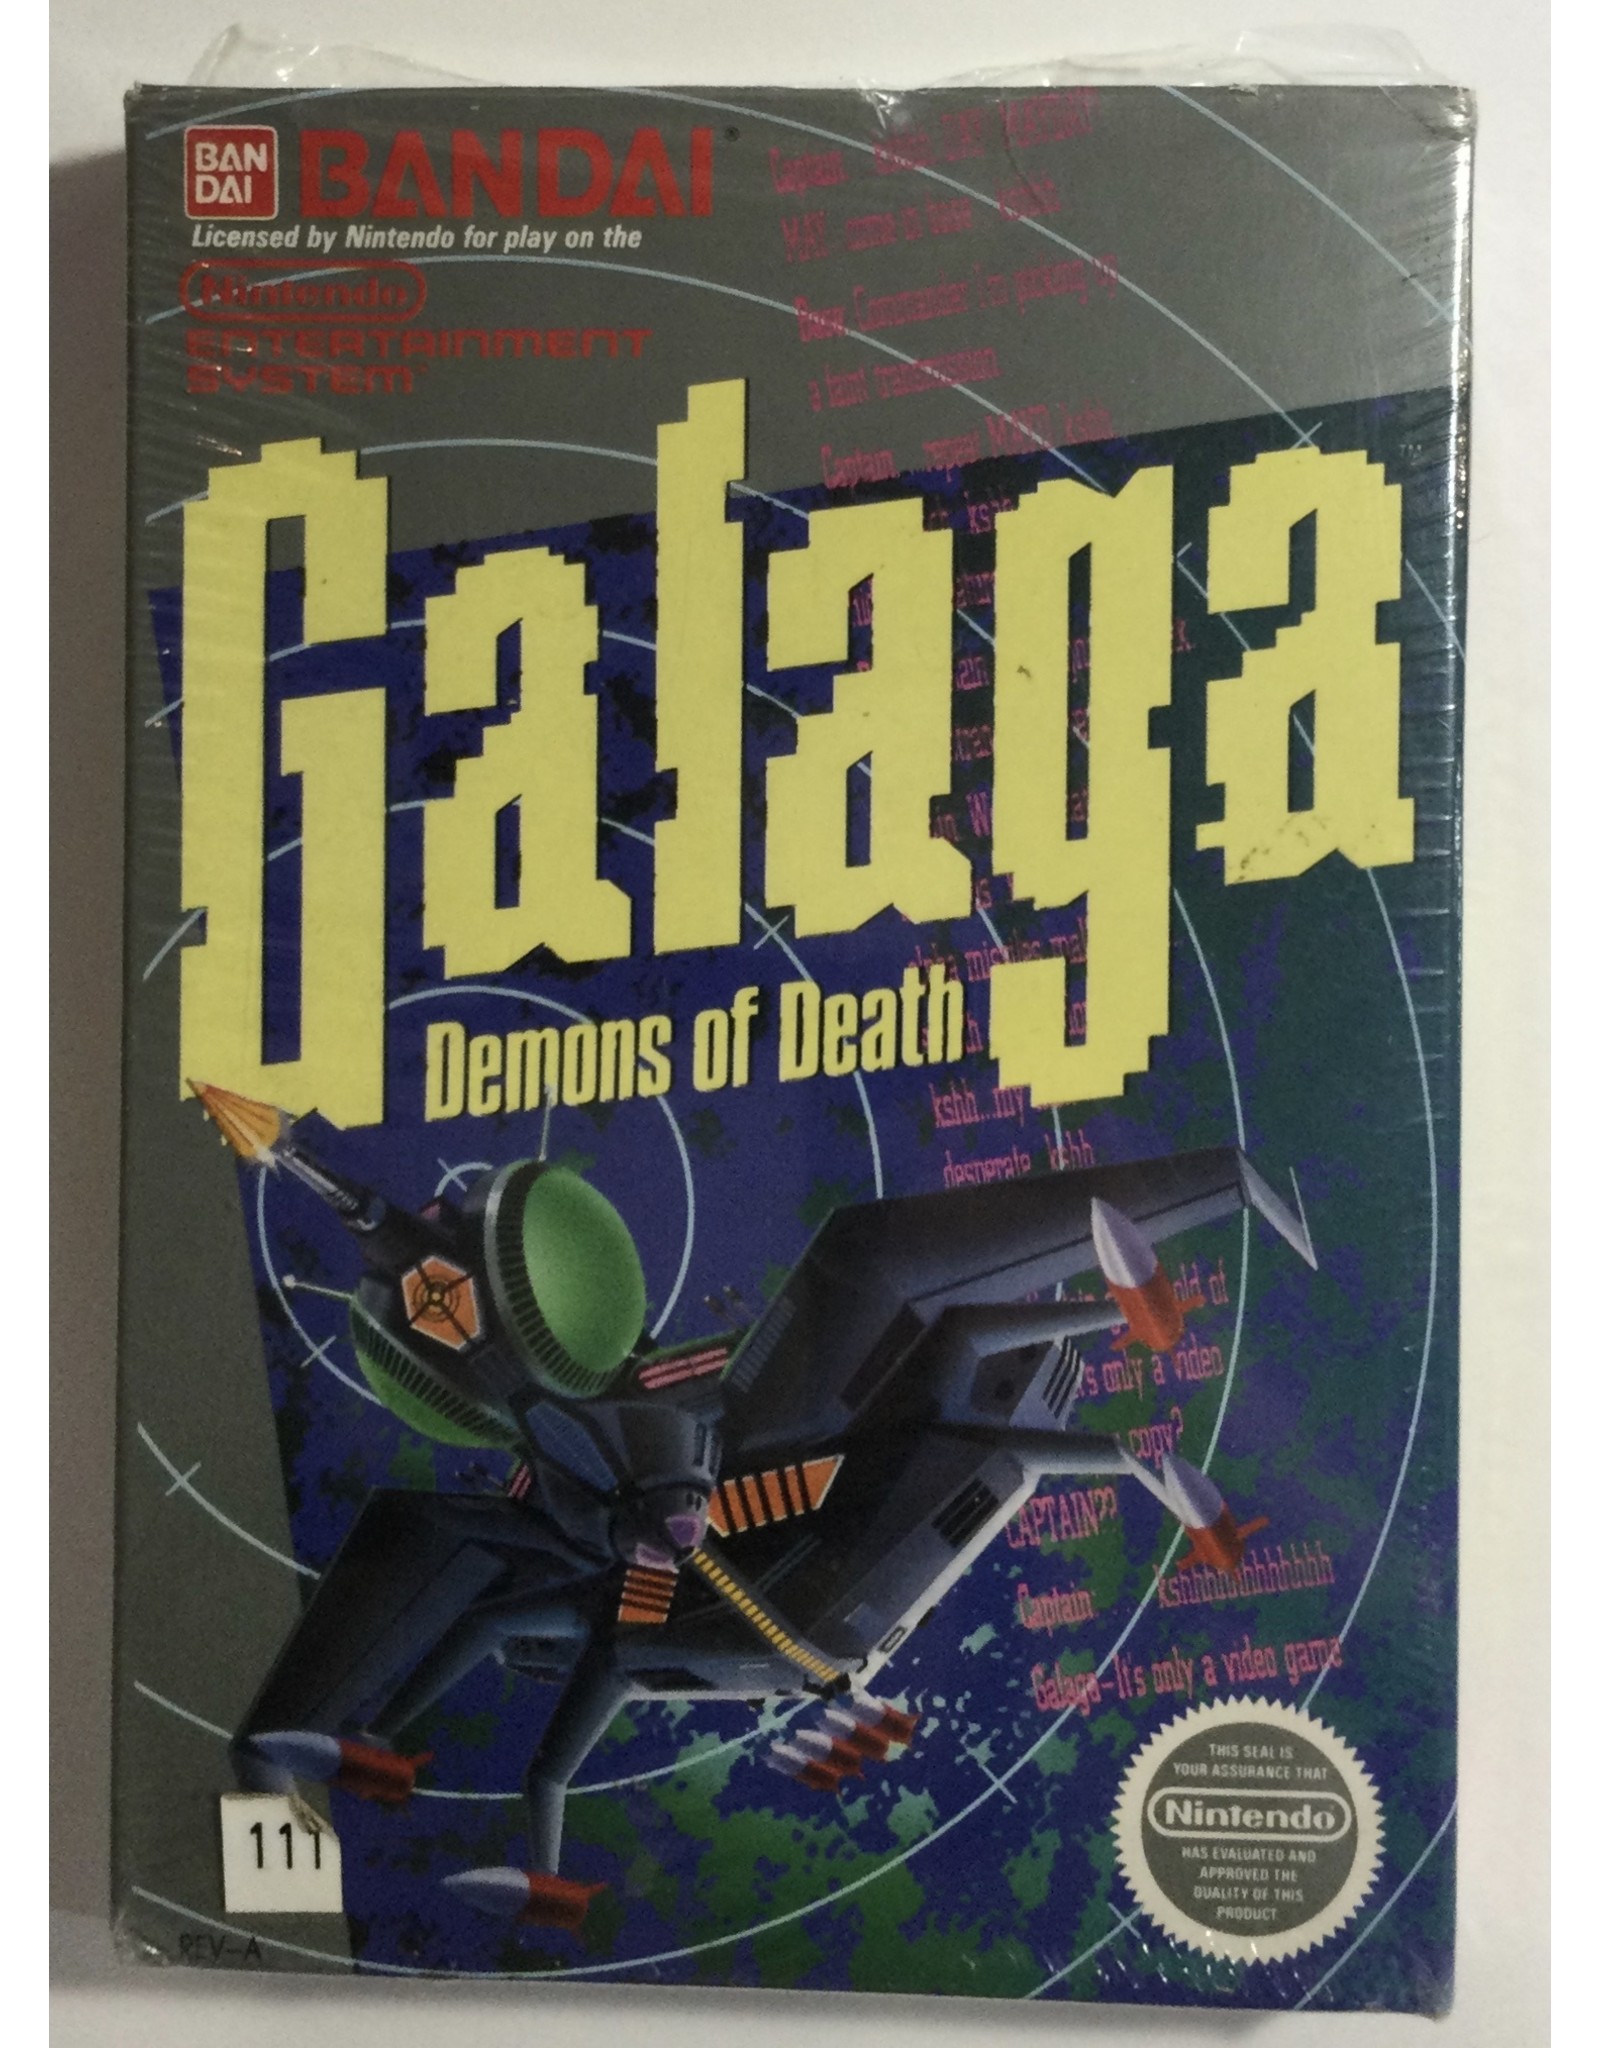 BANDAI Galaga Demons of Death for Nintendo Entertainment system (NES)